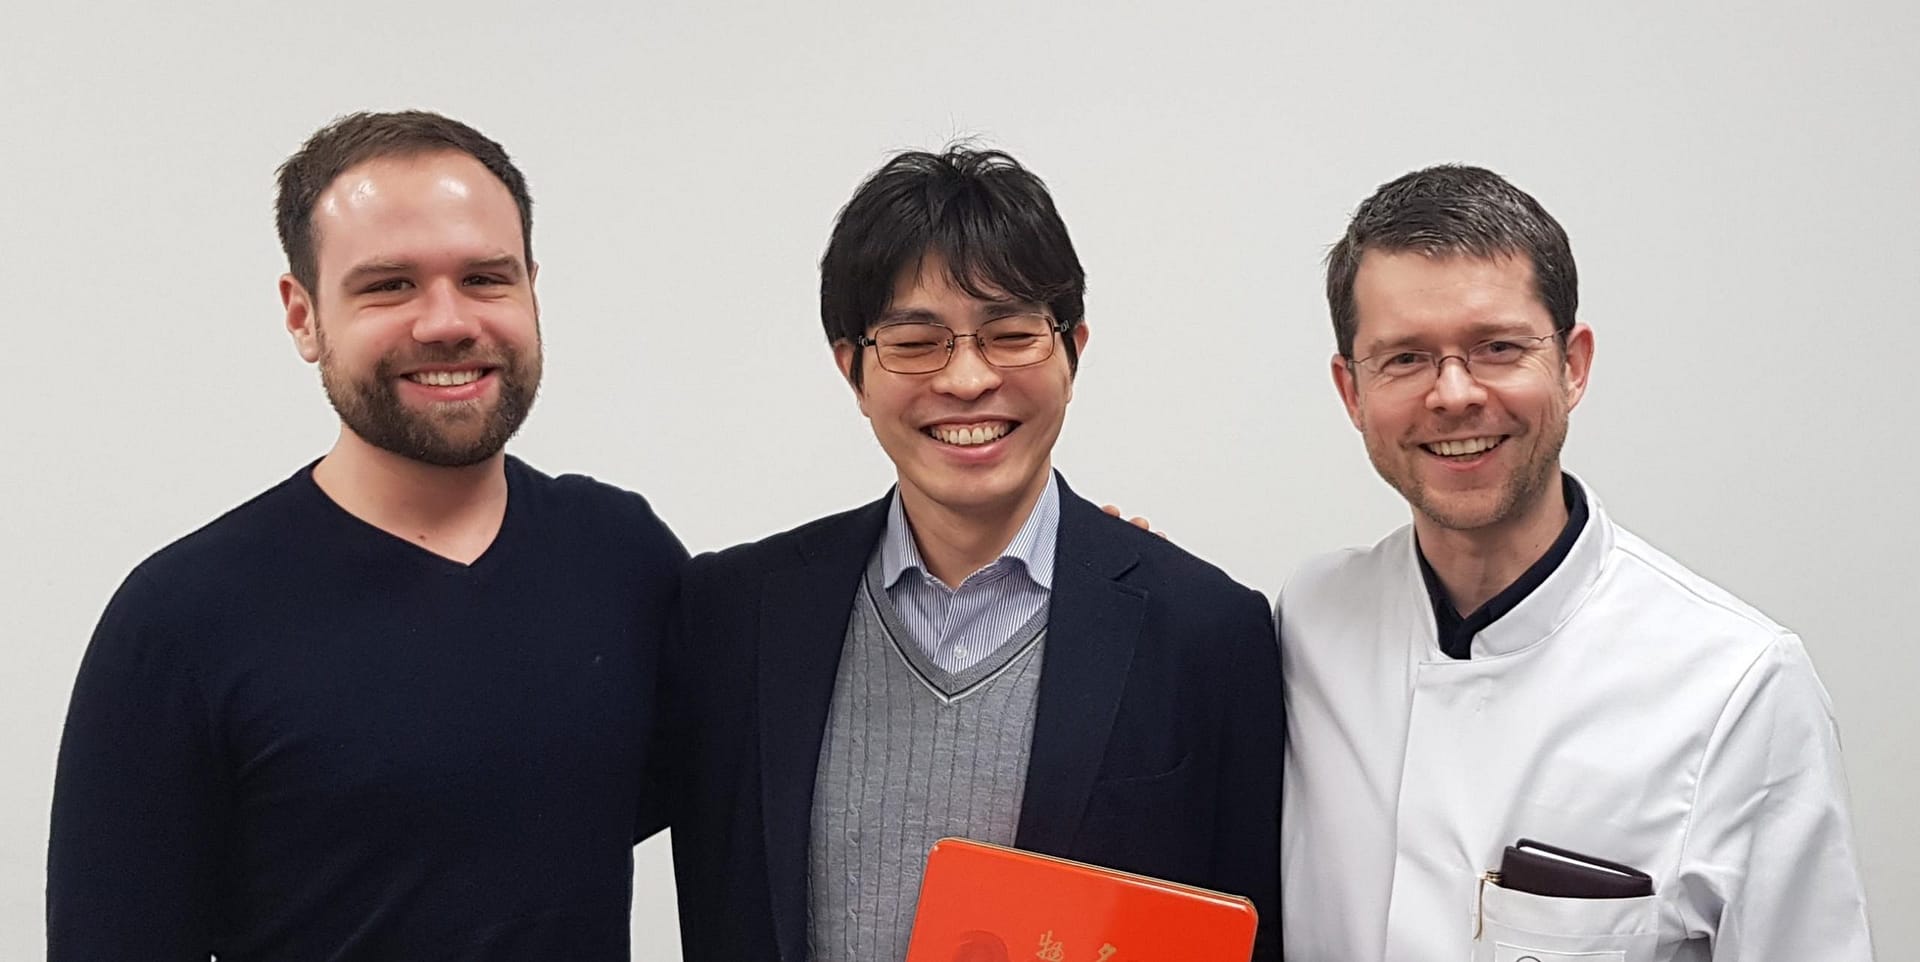 Prof. Kitagawa together with Dr. Florian Michallek and Prof. Dewey